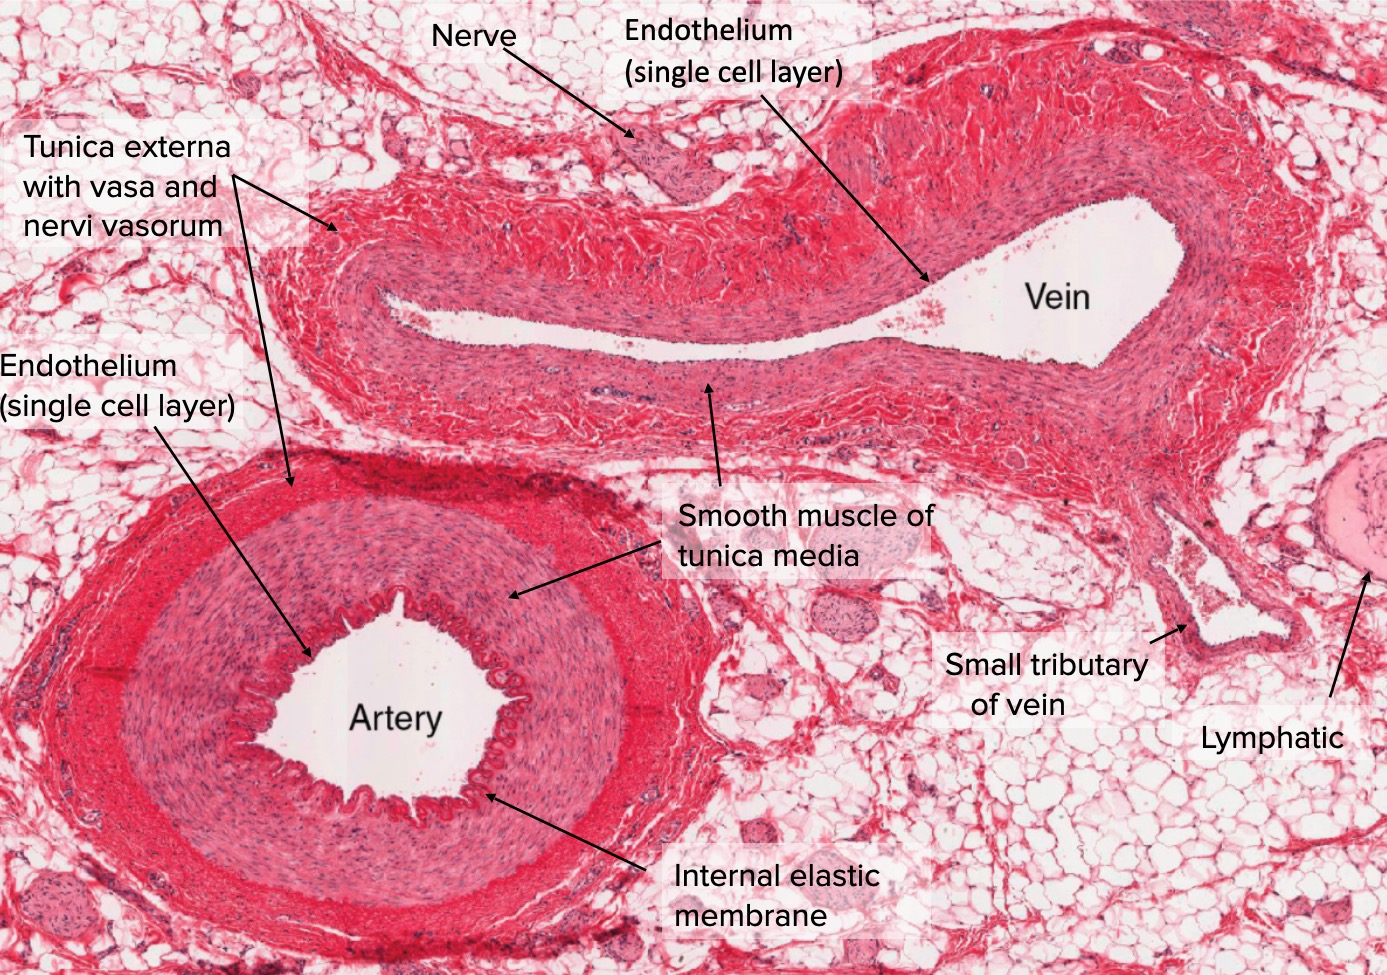 muscular artery vs elastic artery histology